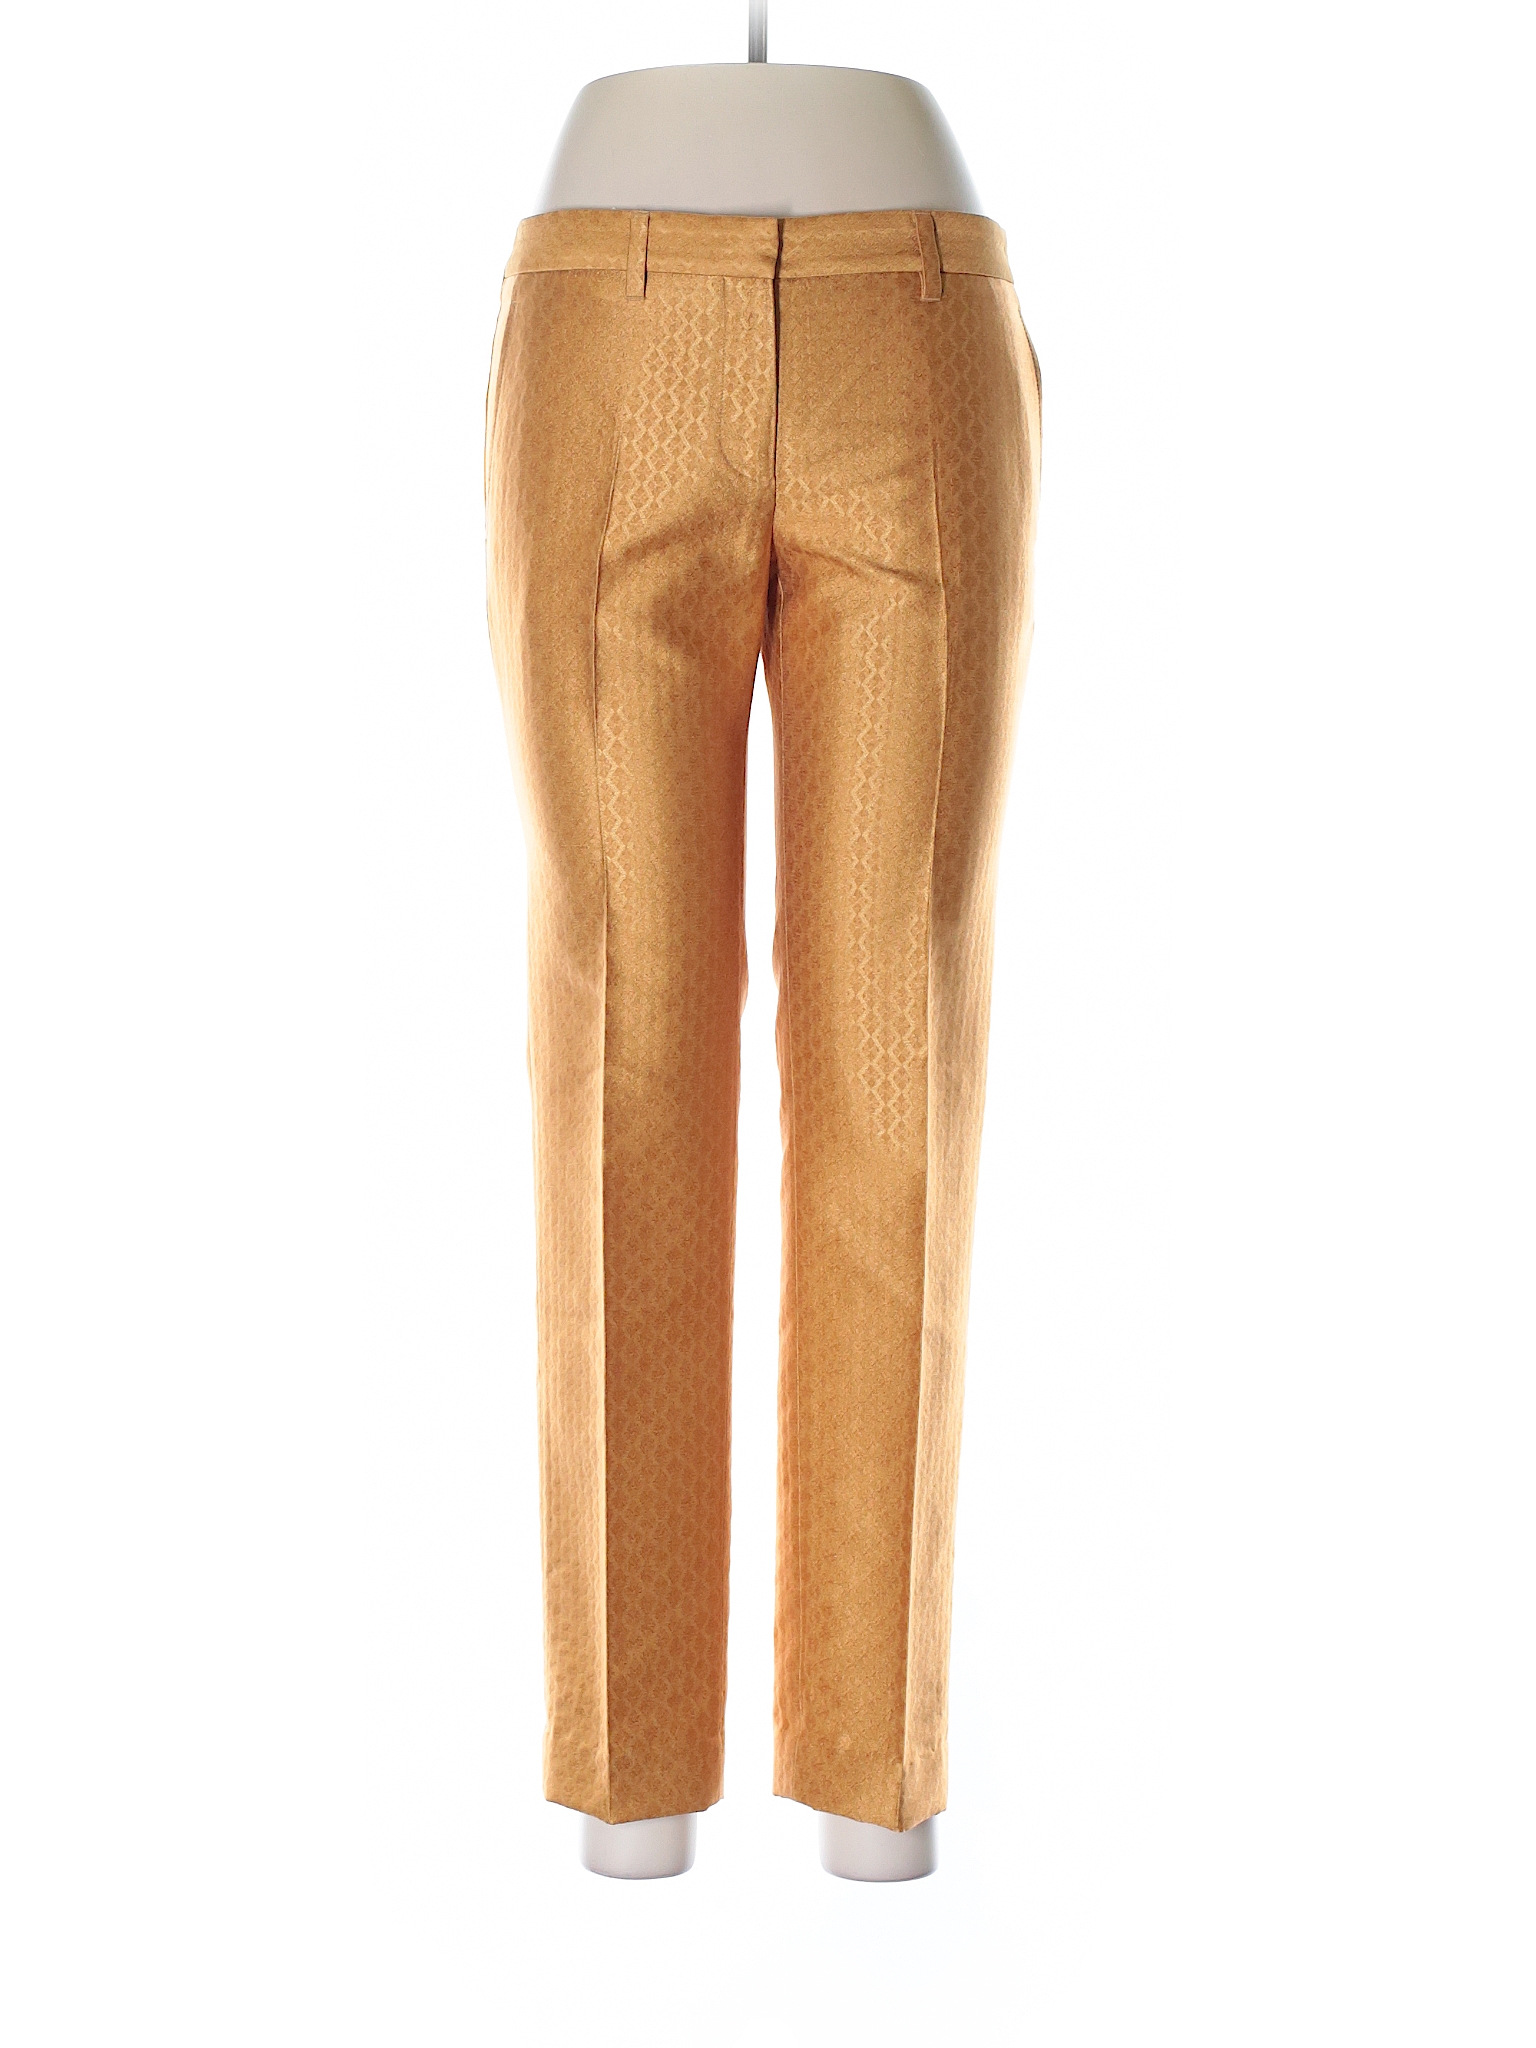 Mauro Grifoni Print Gold Casual Pants Size 40 (EU) - 95% off | thredUP